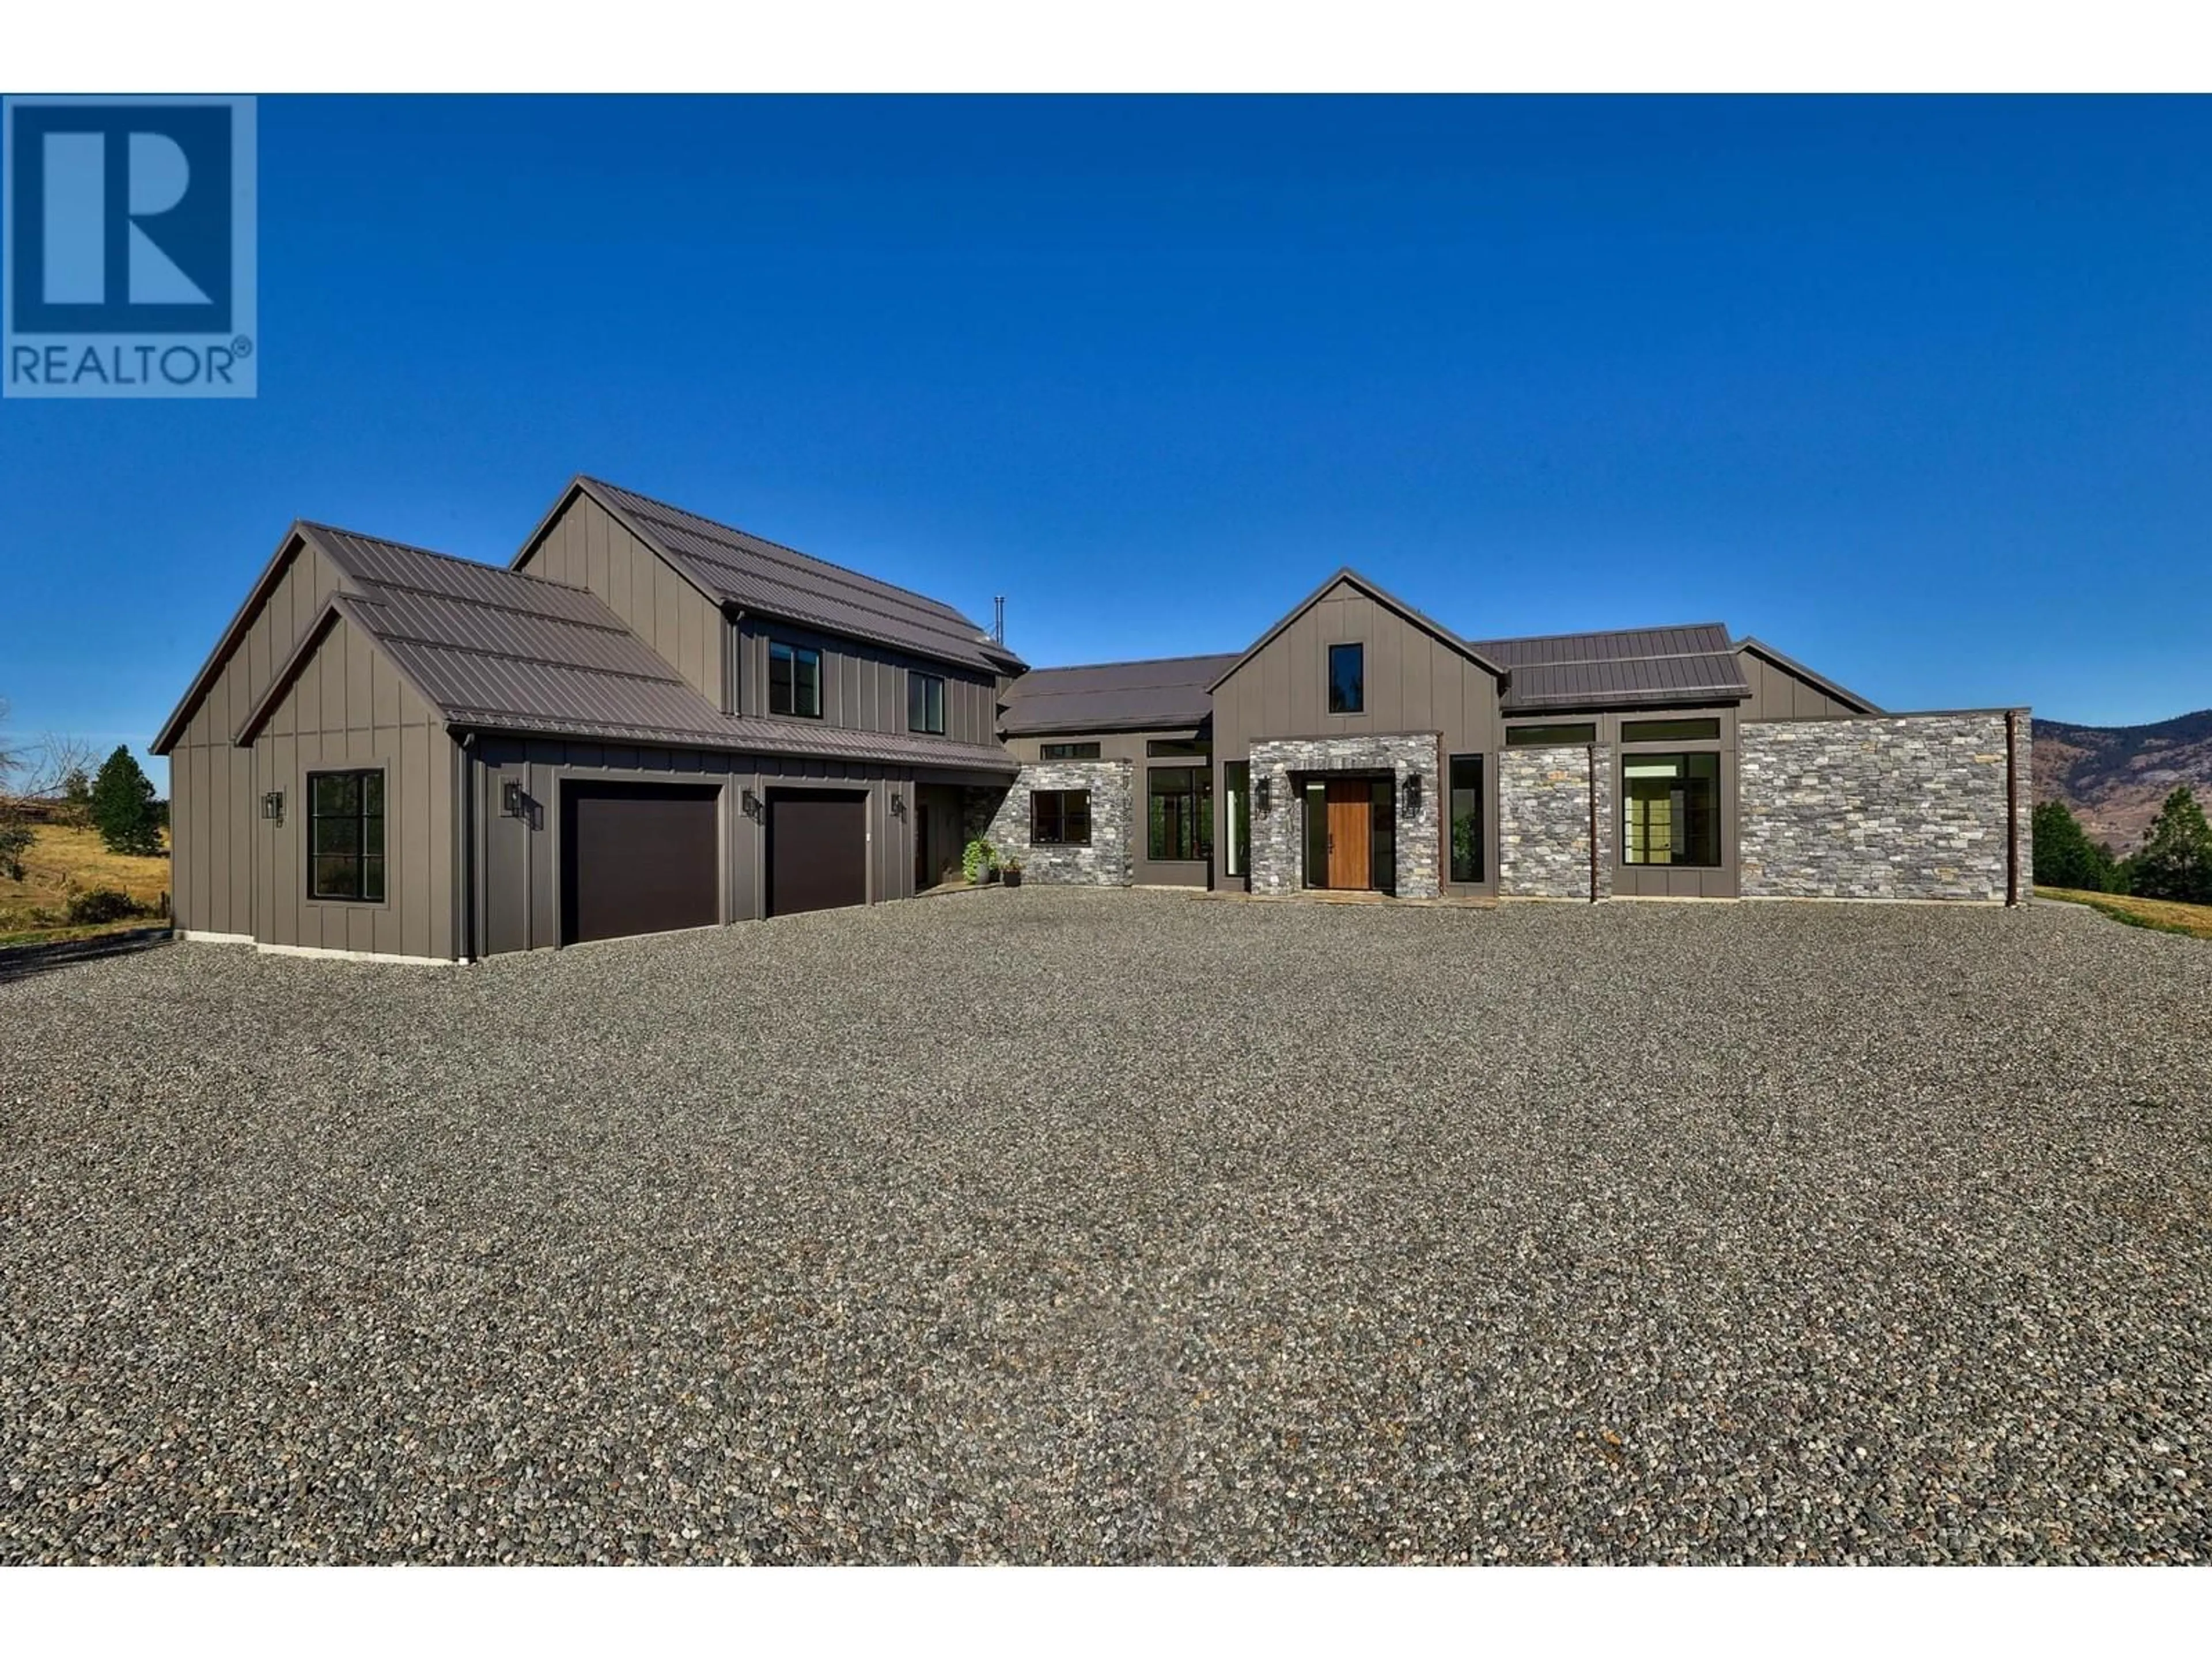 Home with brick exterior material for 8555 BARNHARTVALE ROAD, Kamloops British Columbia